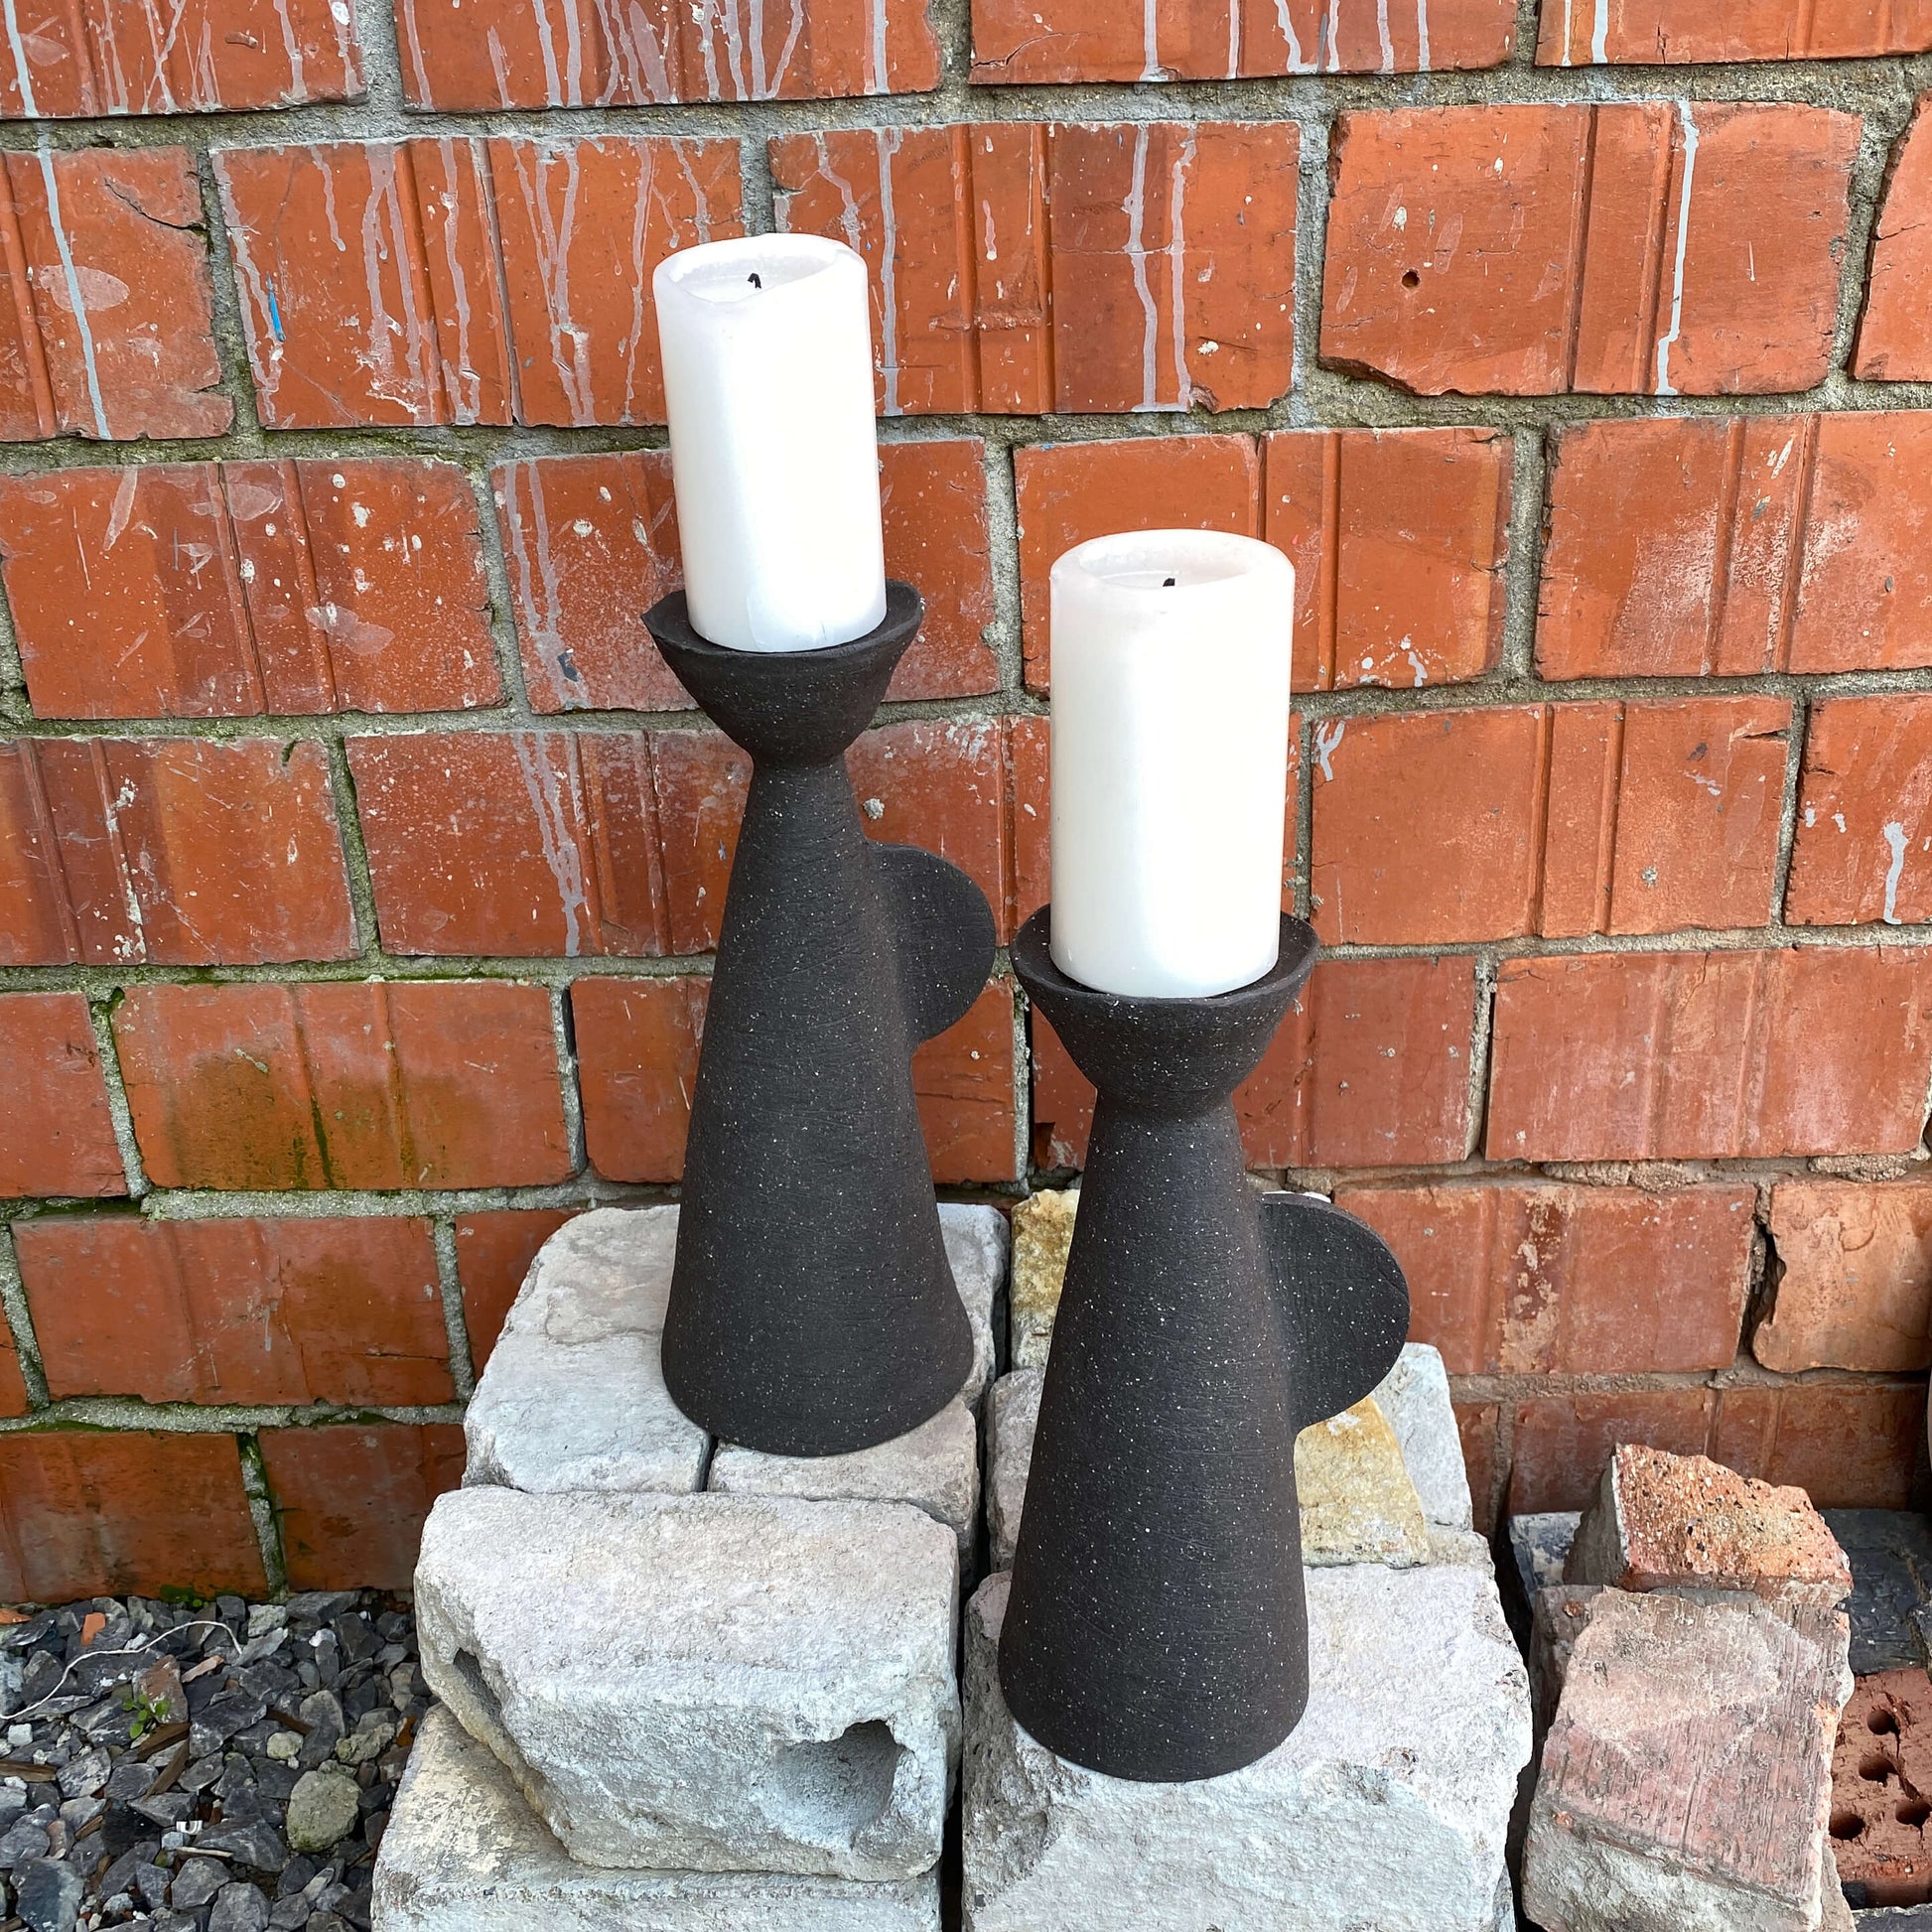 Black ceramic candle holders